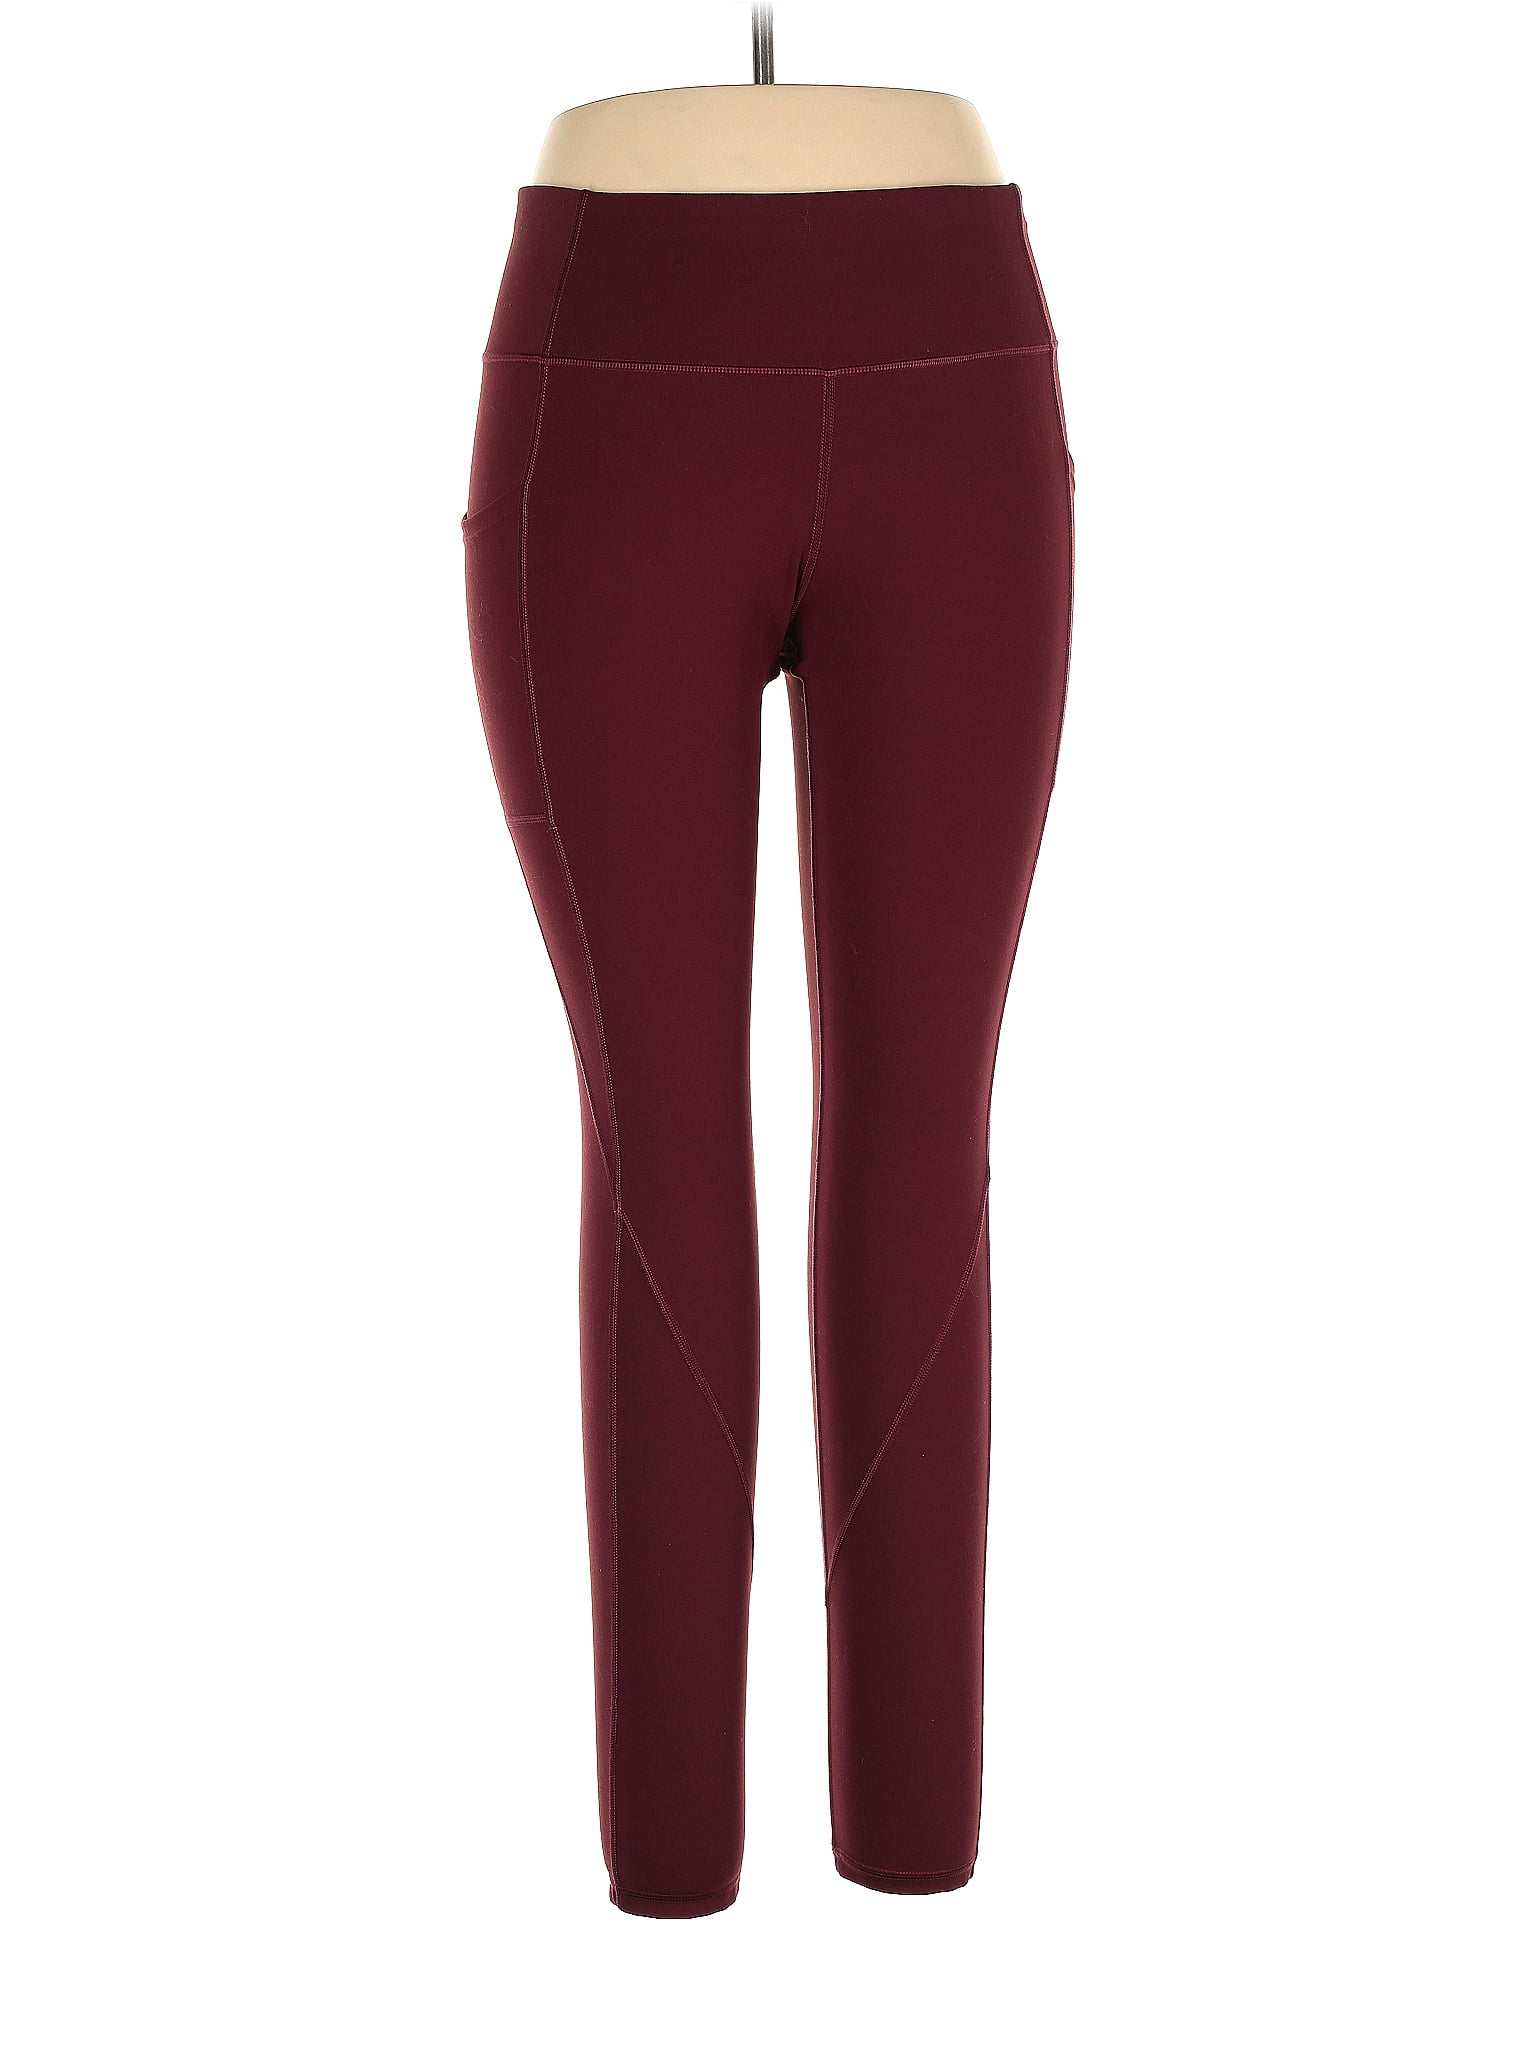 Heathyoga Maroon Burgundy Yoga Pants Size XXL - 62% off